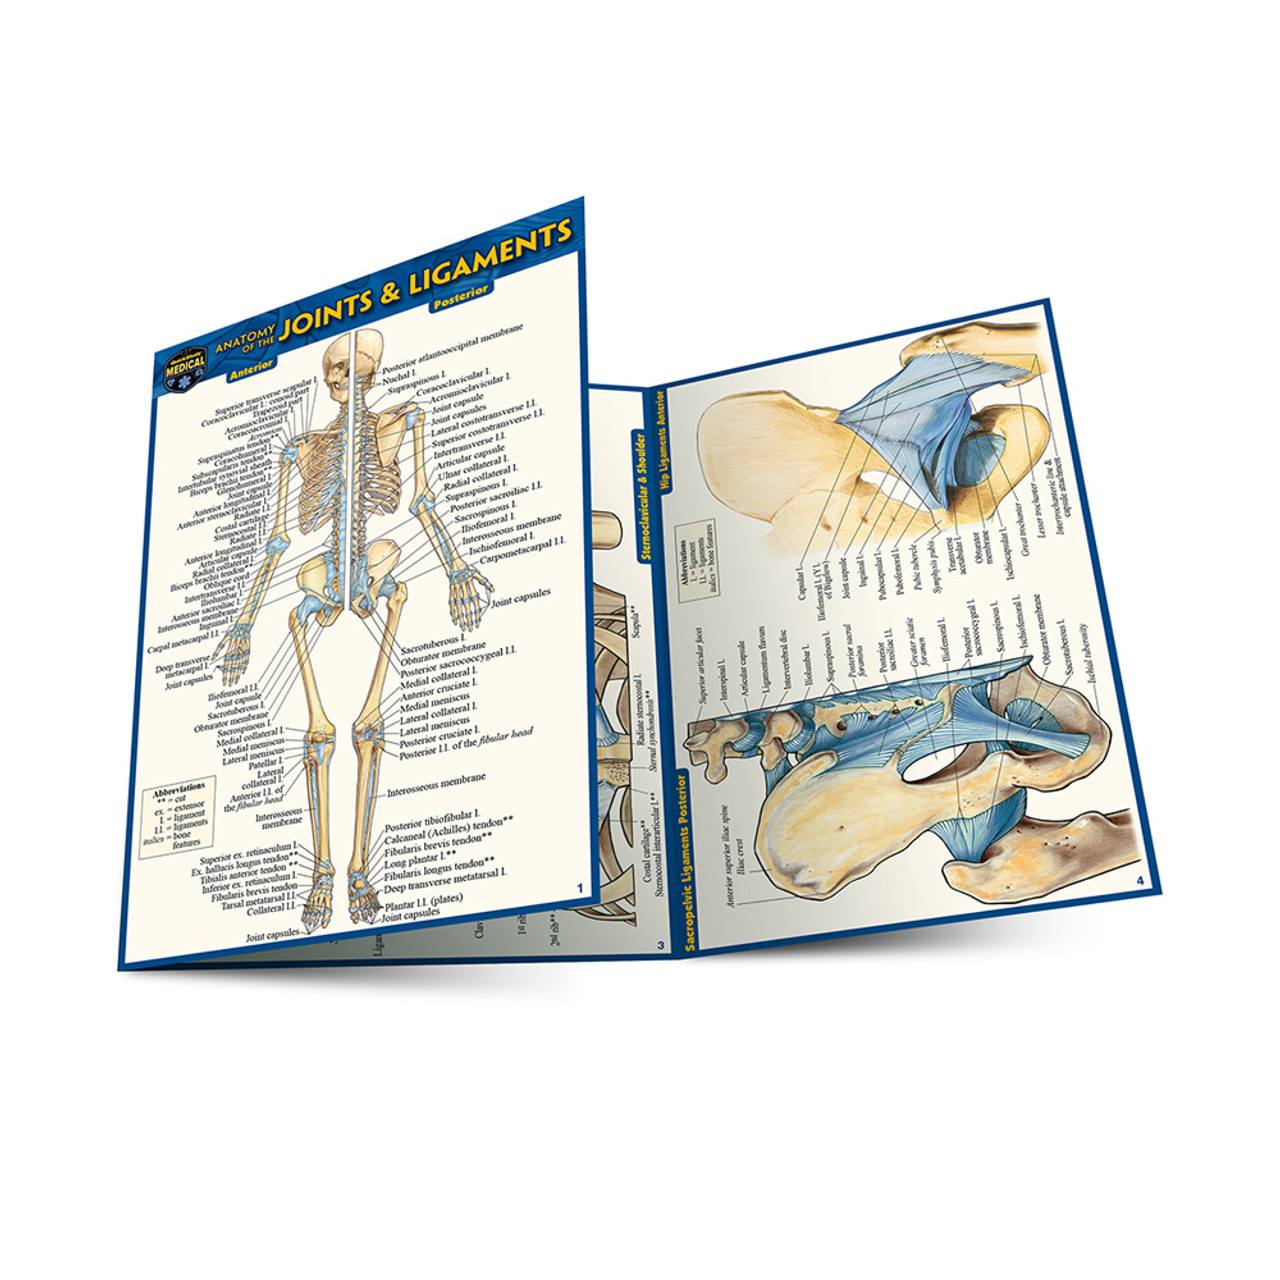 quickstudy-anatomy-laminated-4x6-pocket-guide